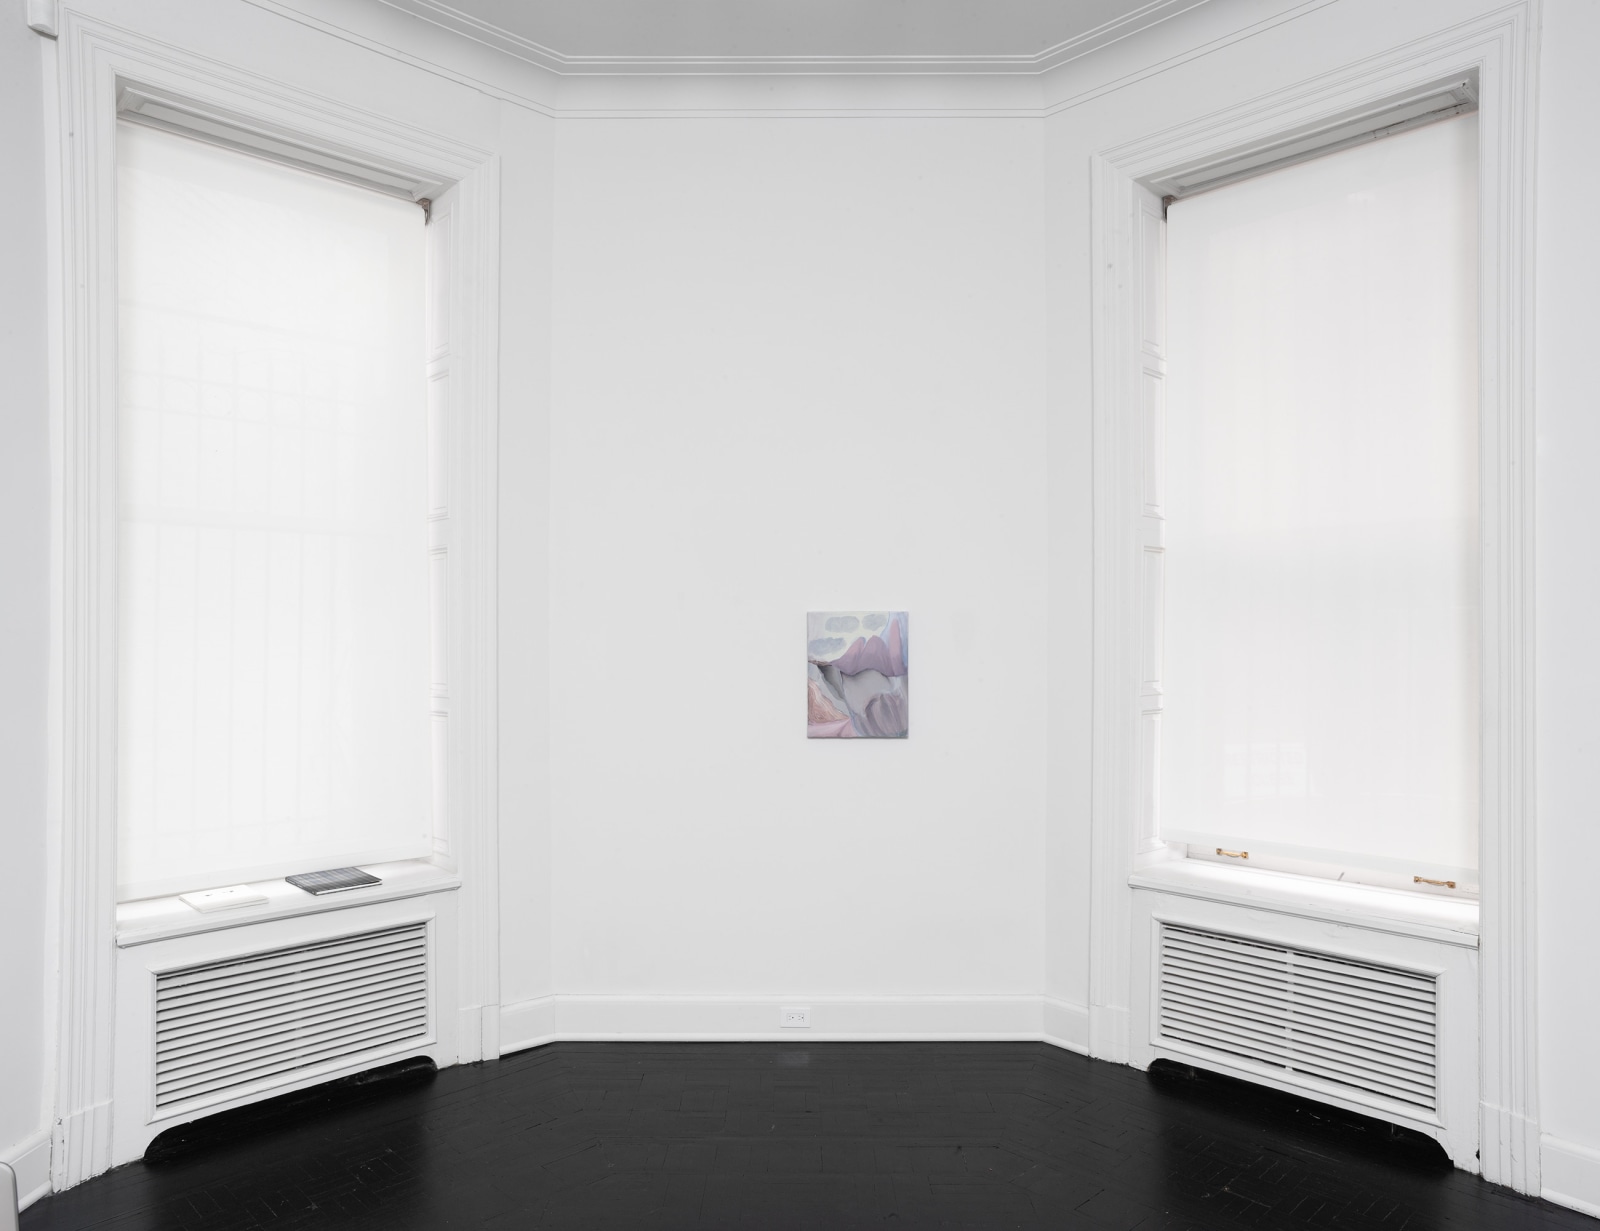 Installation view, Rezi van Lankveld, Soft Sun, Petzel, 2022